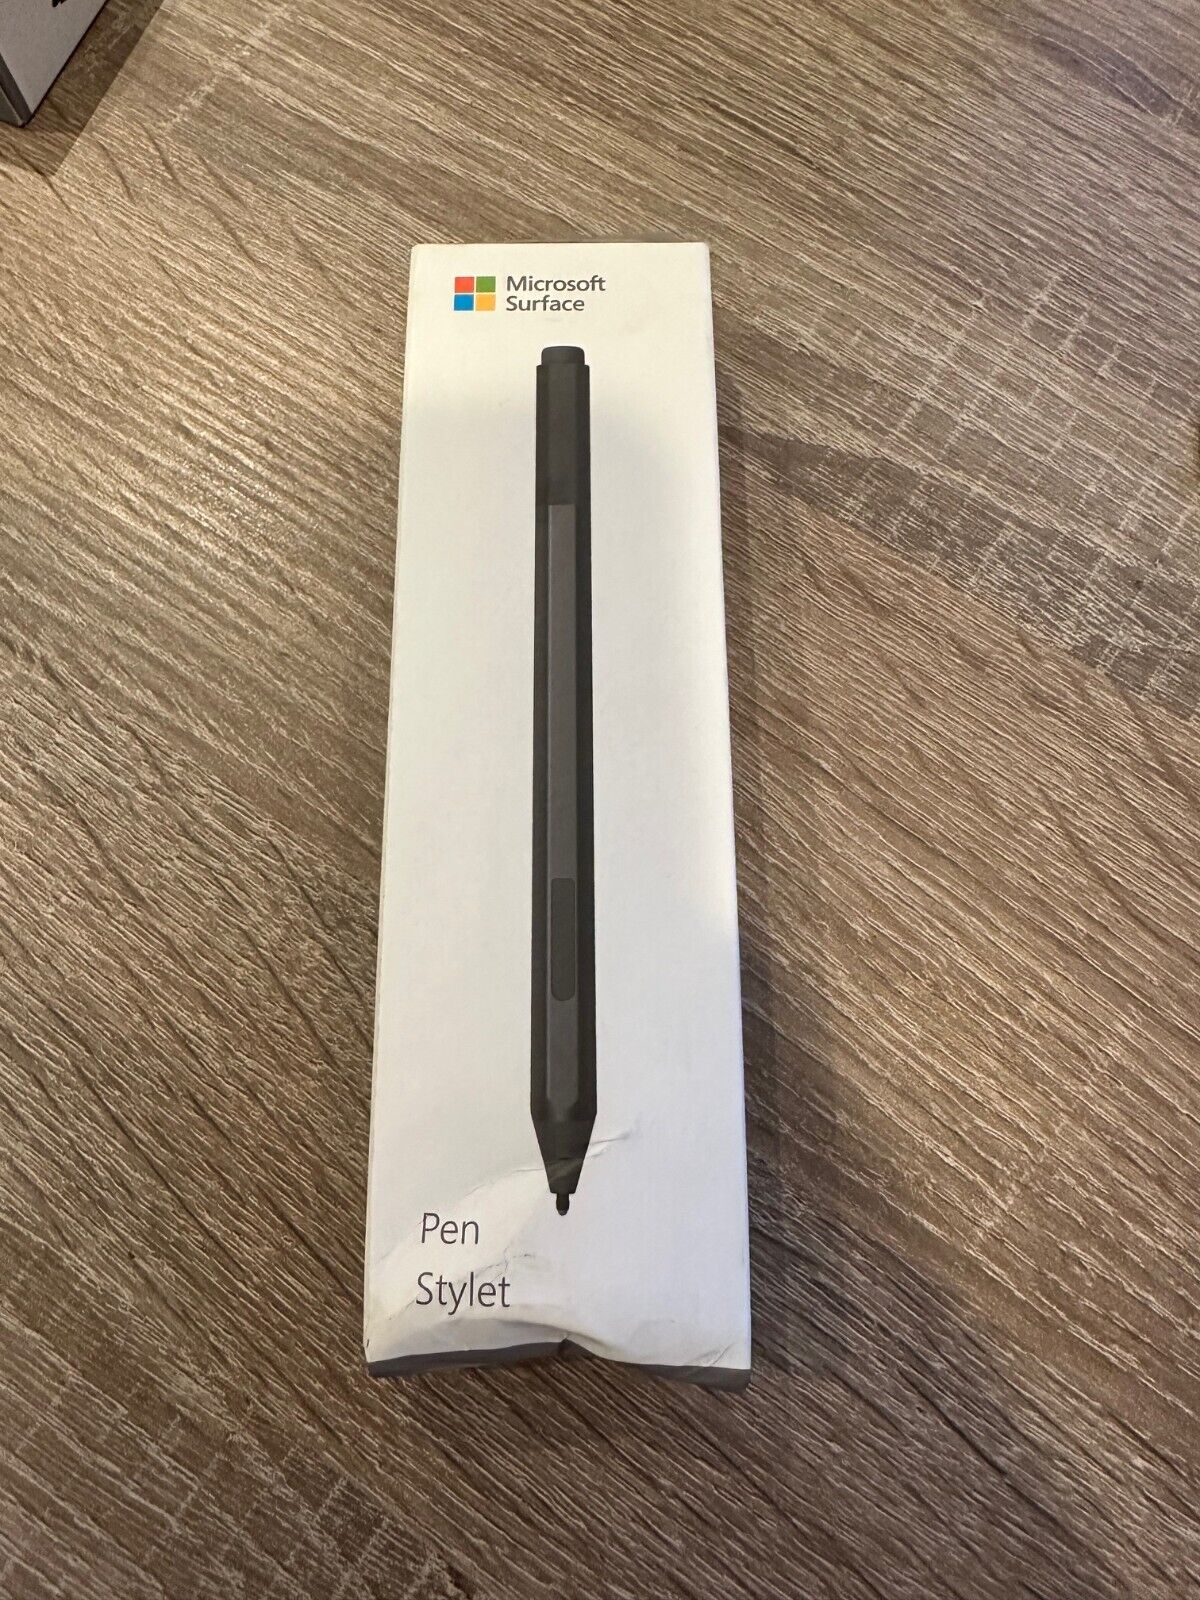 NEW DENTED BOX Microsoft Surface Model 1776 Pen Charcoal Black EYV-00001